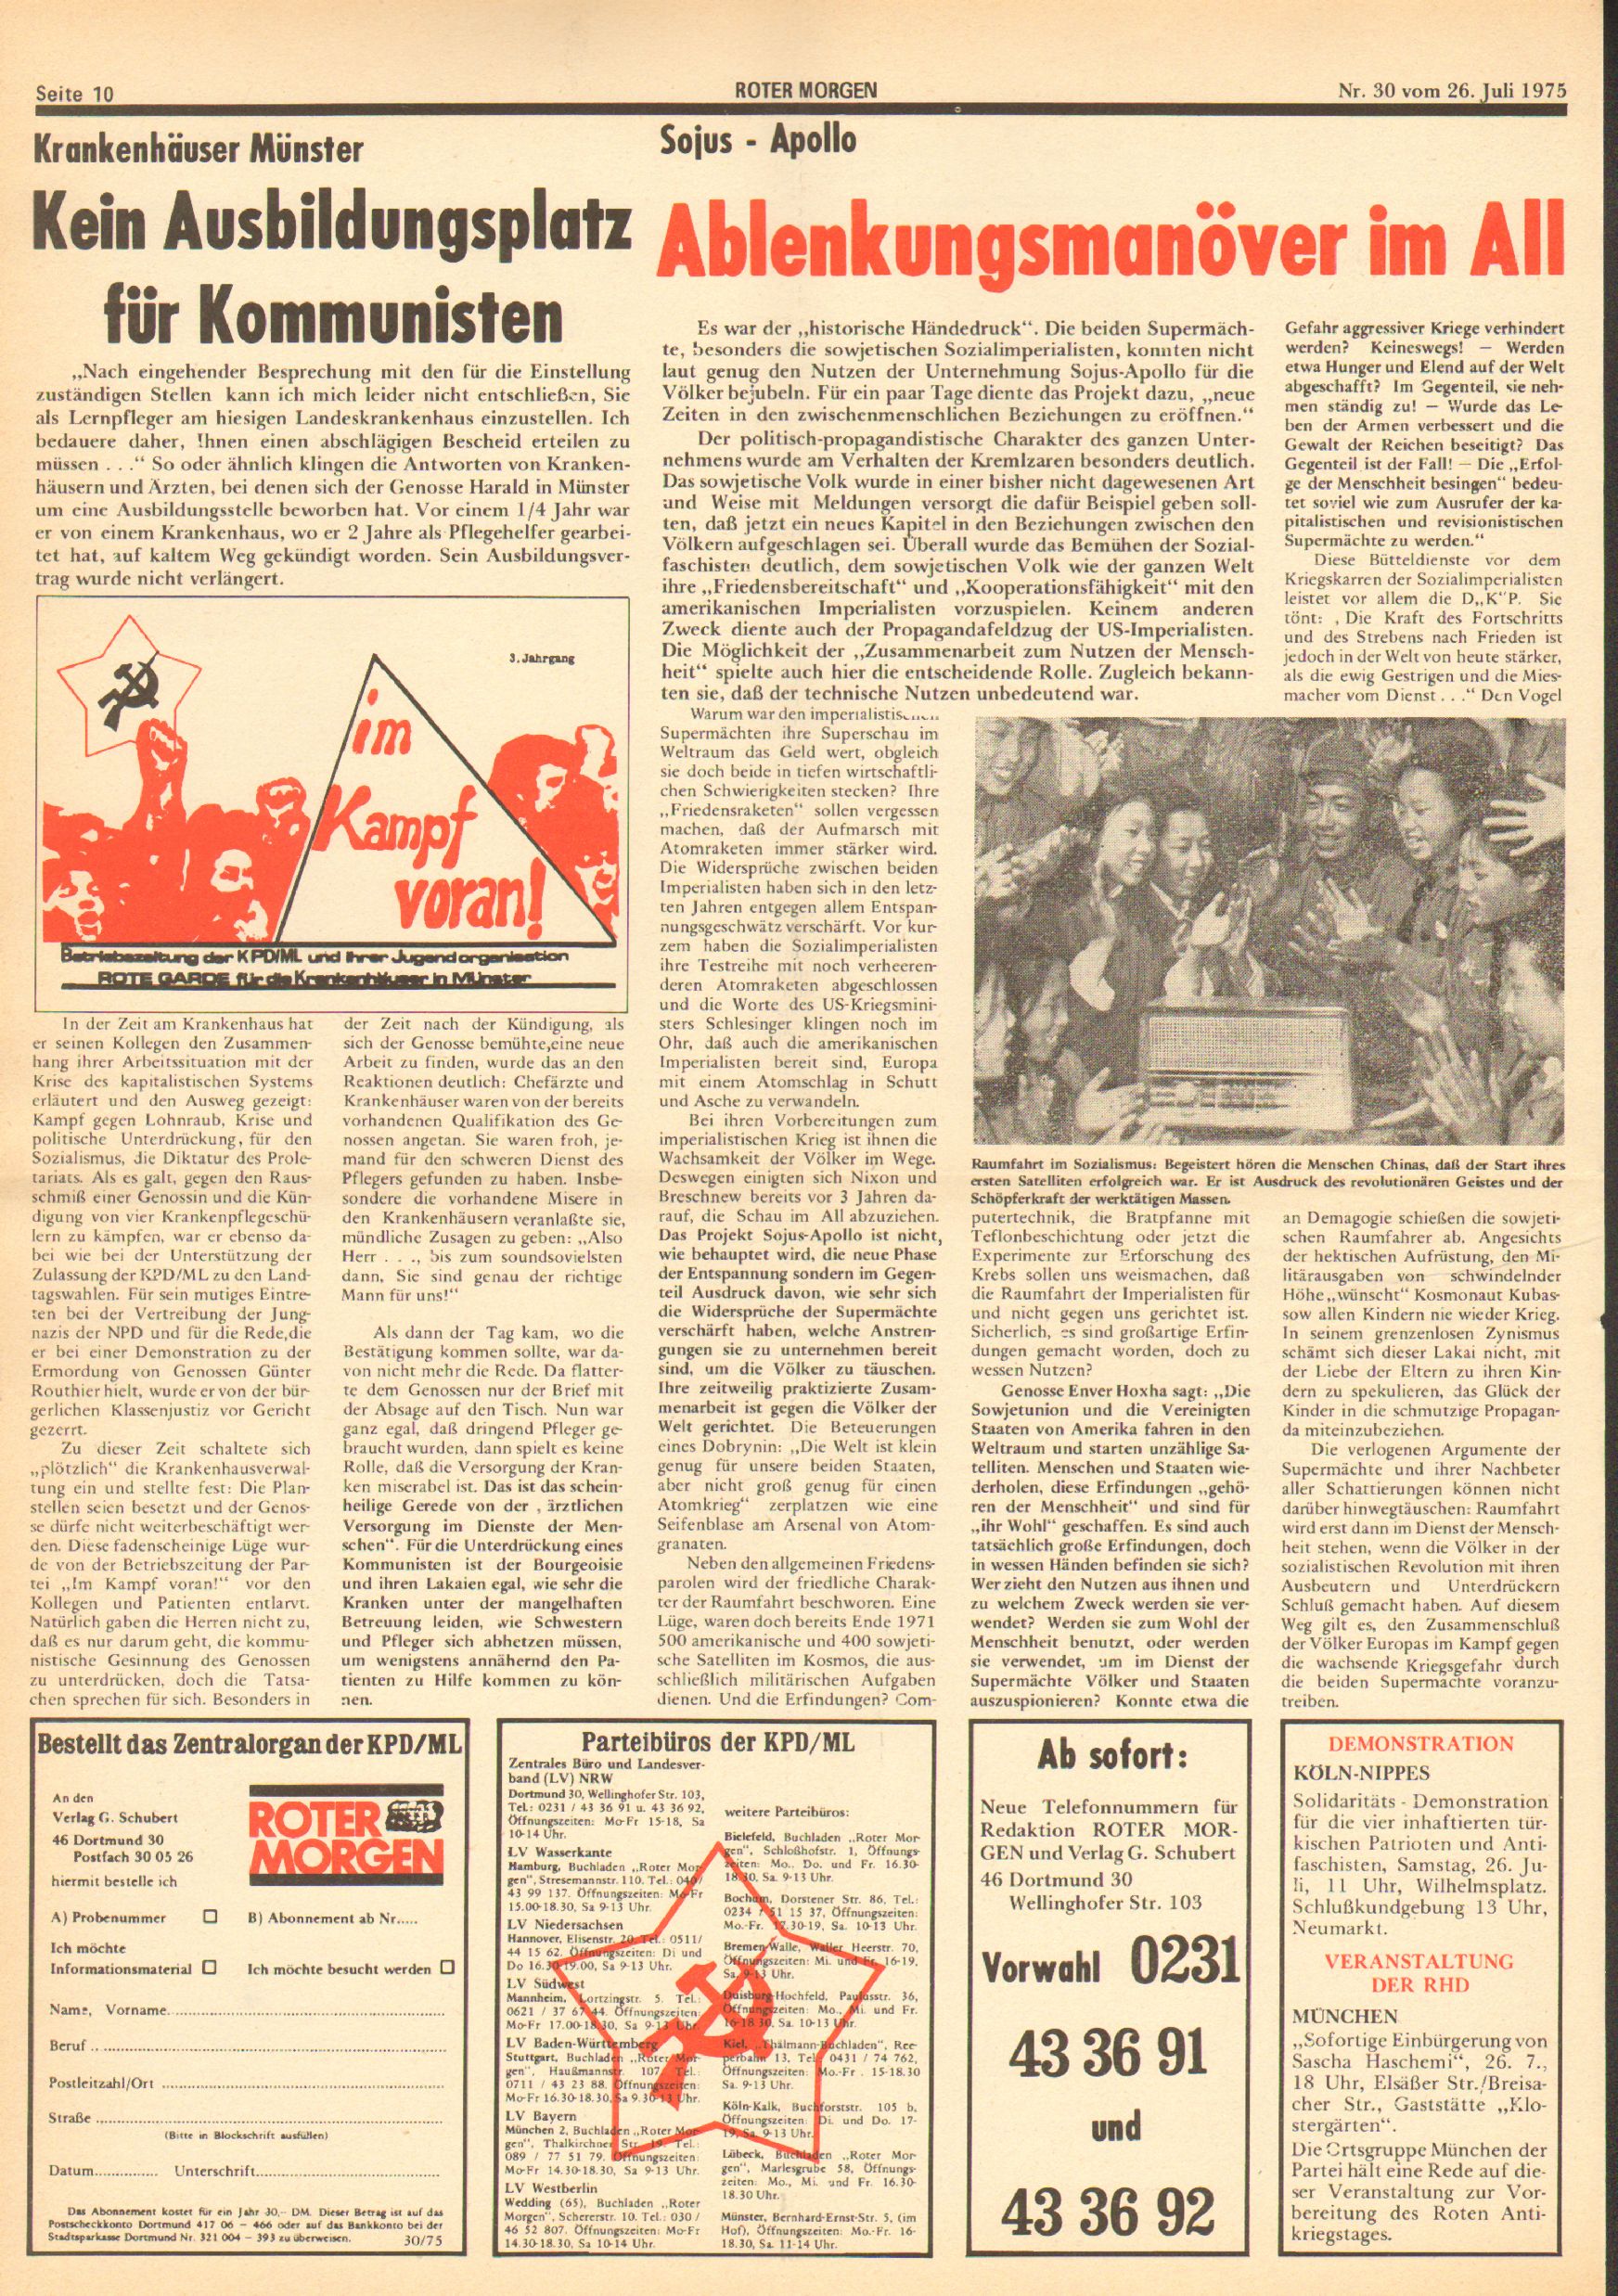 Roter Morgen, 9. Jg., 26. Juli 1975, Nr. 30, Seite 10